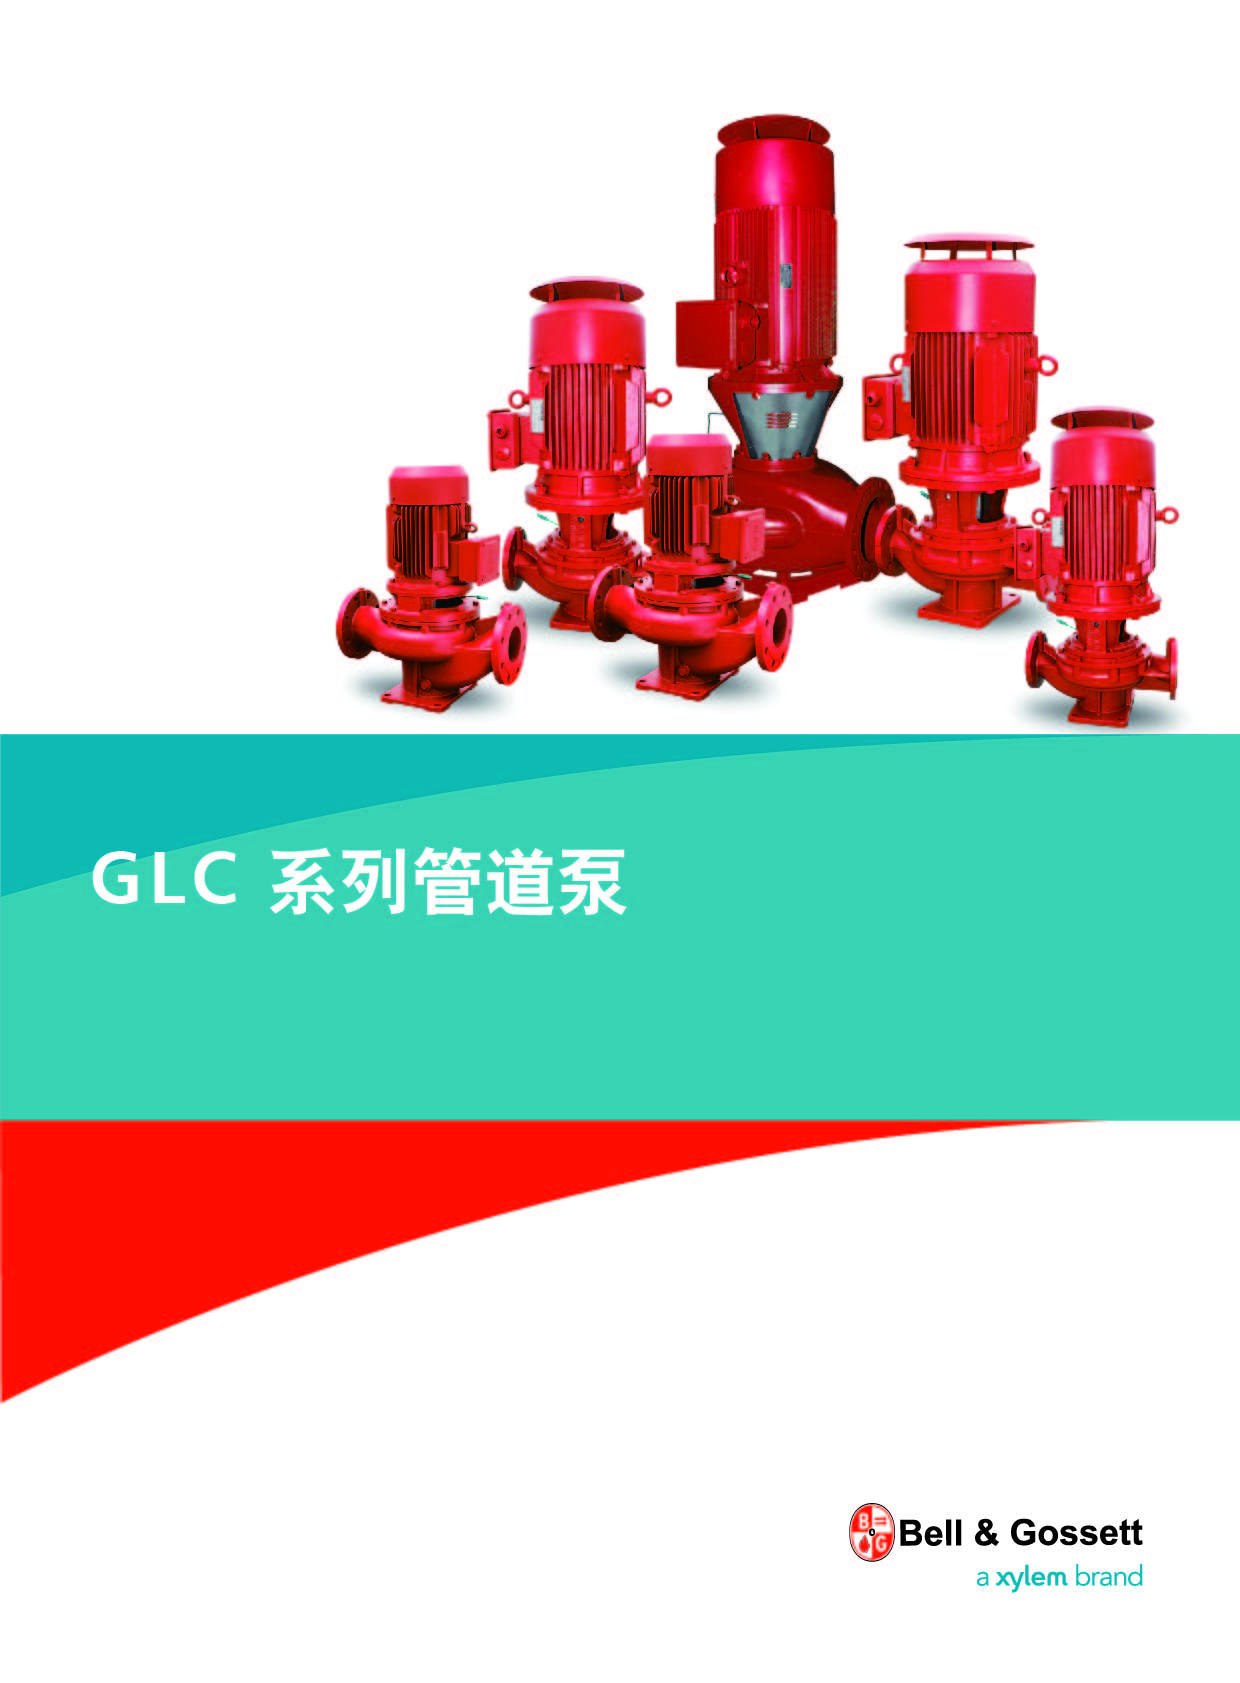 Bell&Gossett(冰际）GLC系列管道泵